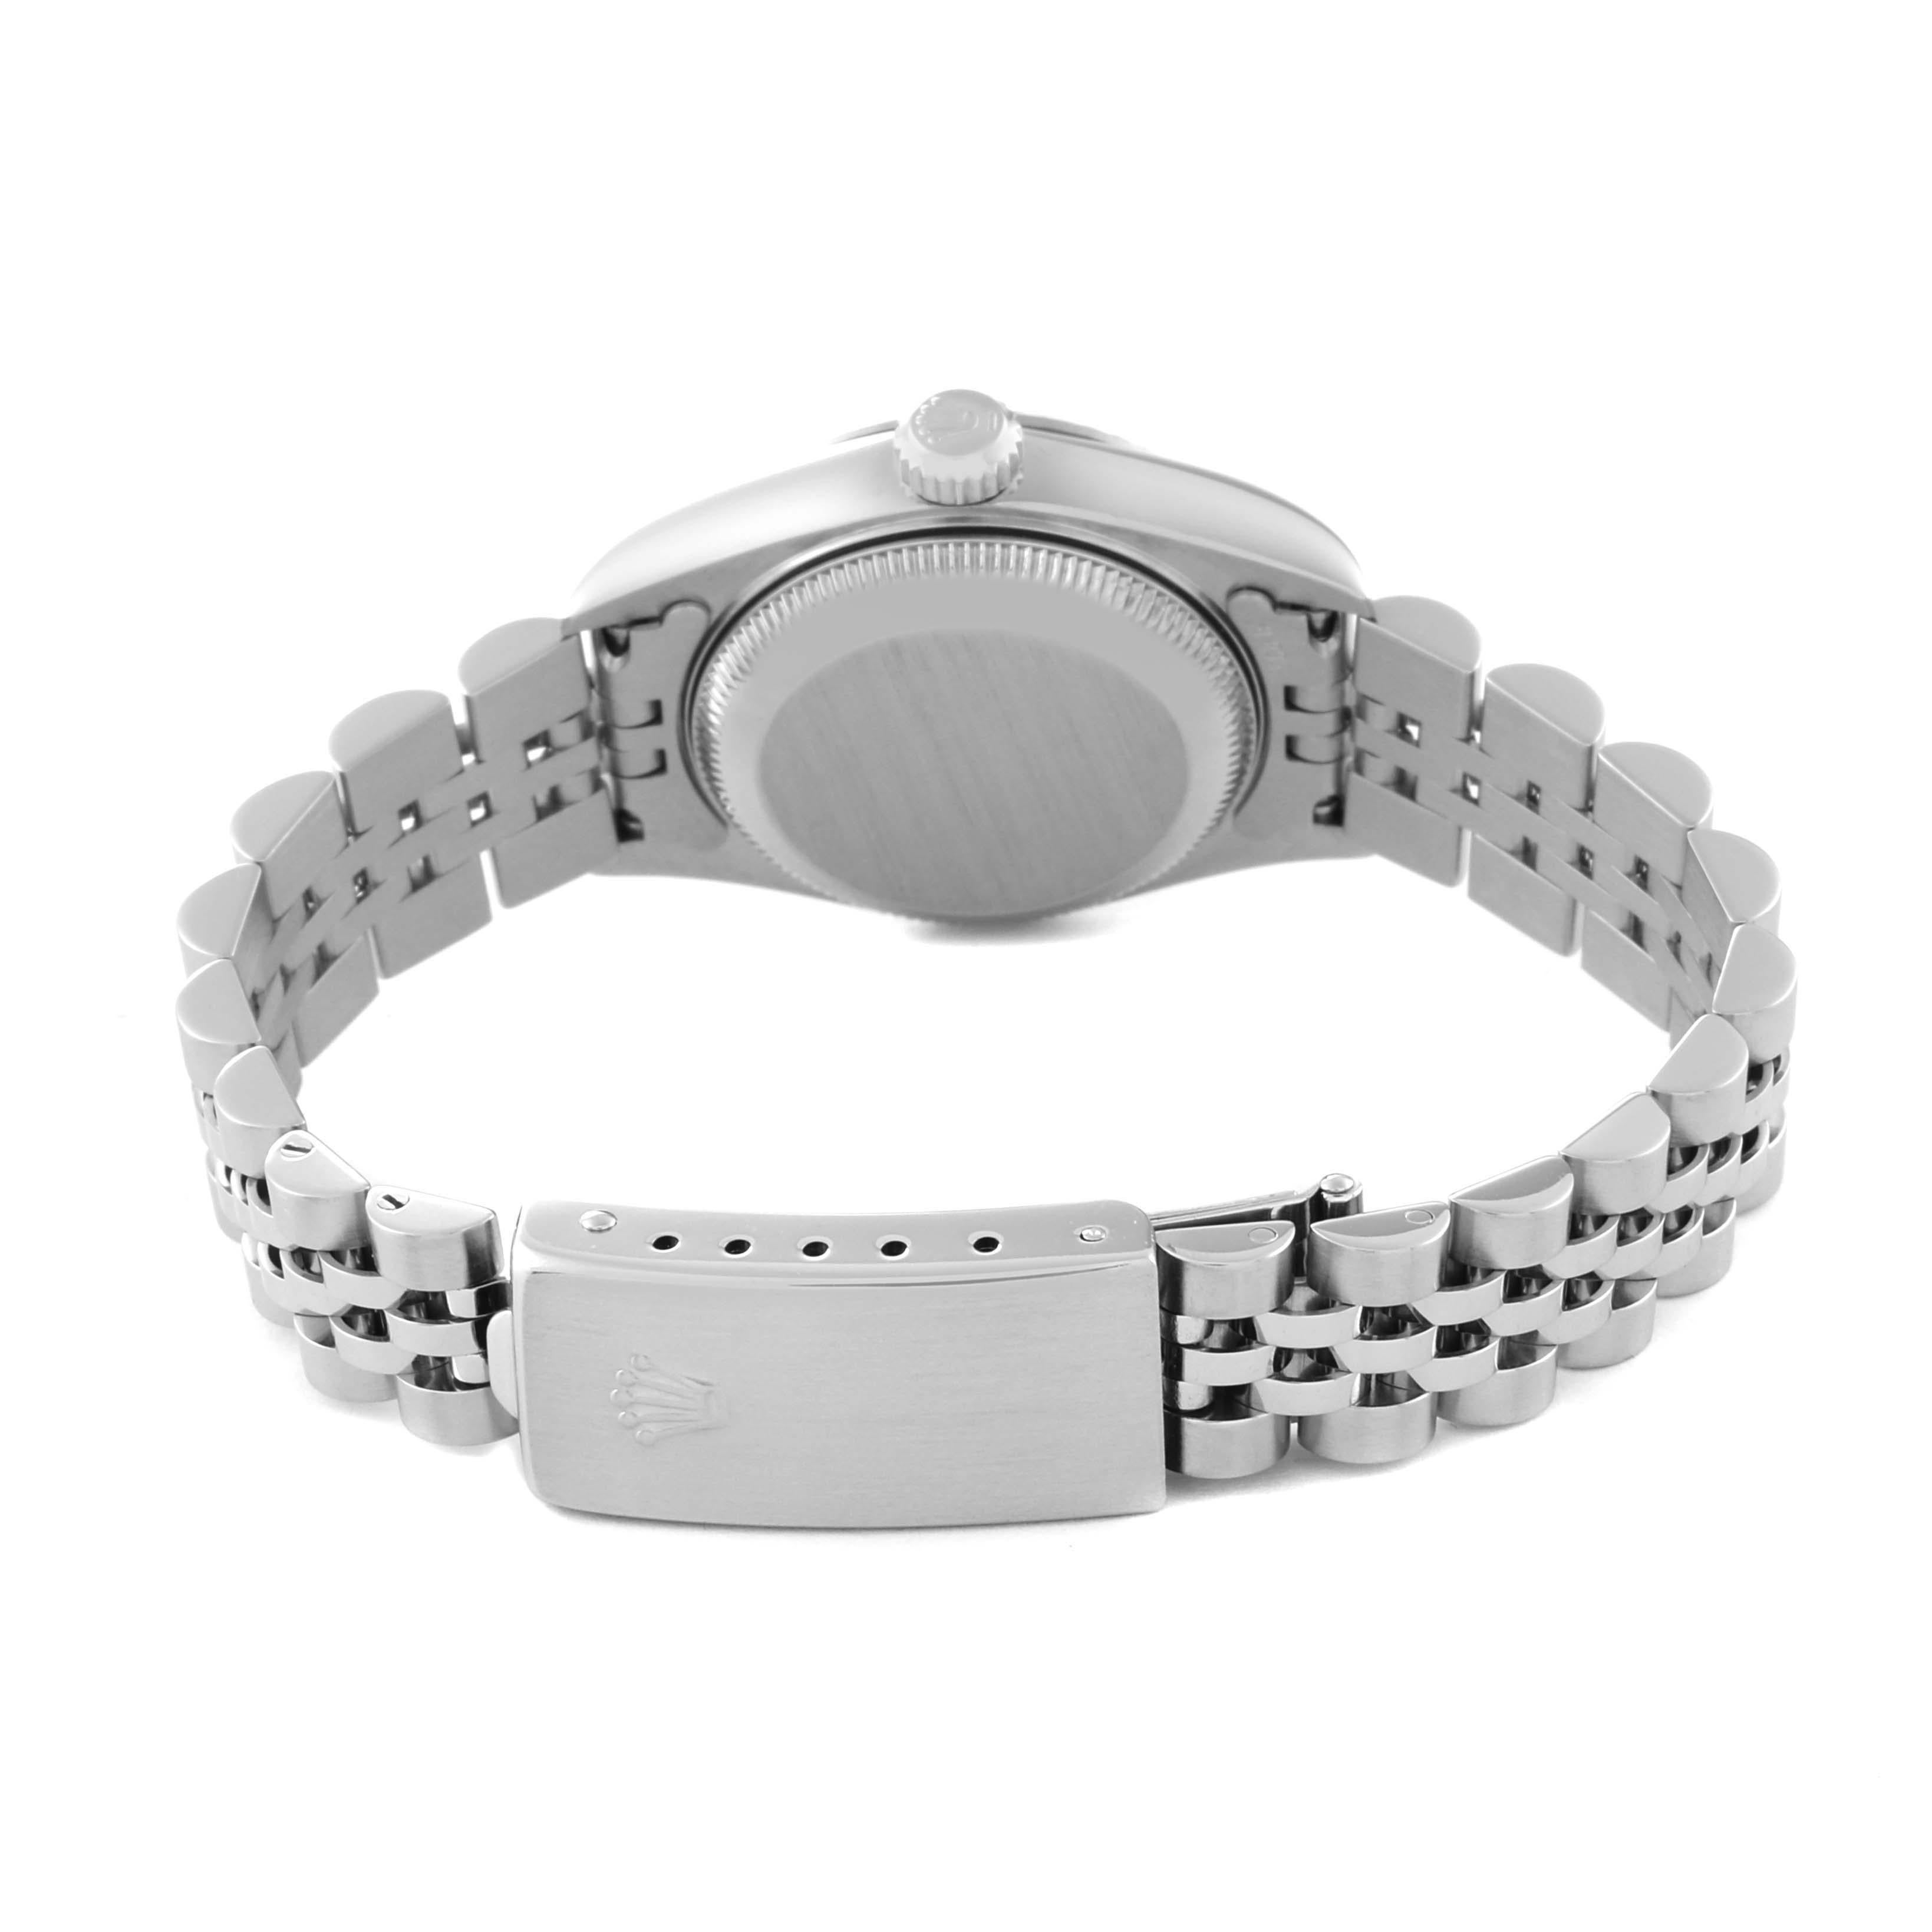 Rolex Datejust Salmon Diamond Dial White Gold Steel Ladies Watch 79174 5